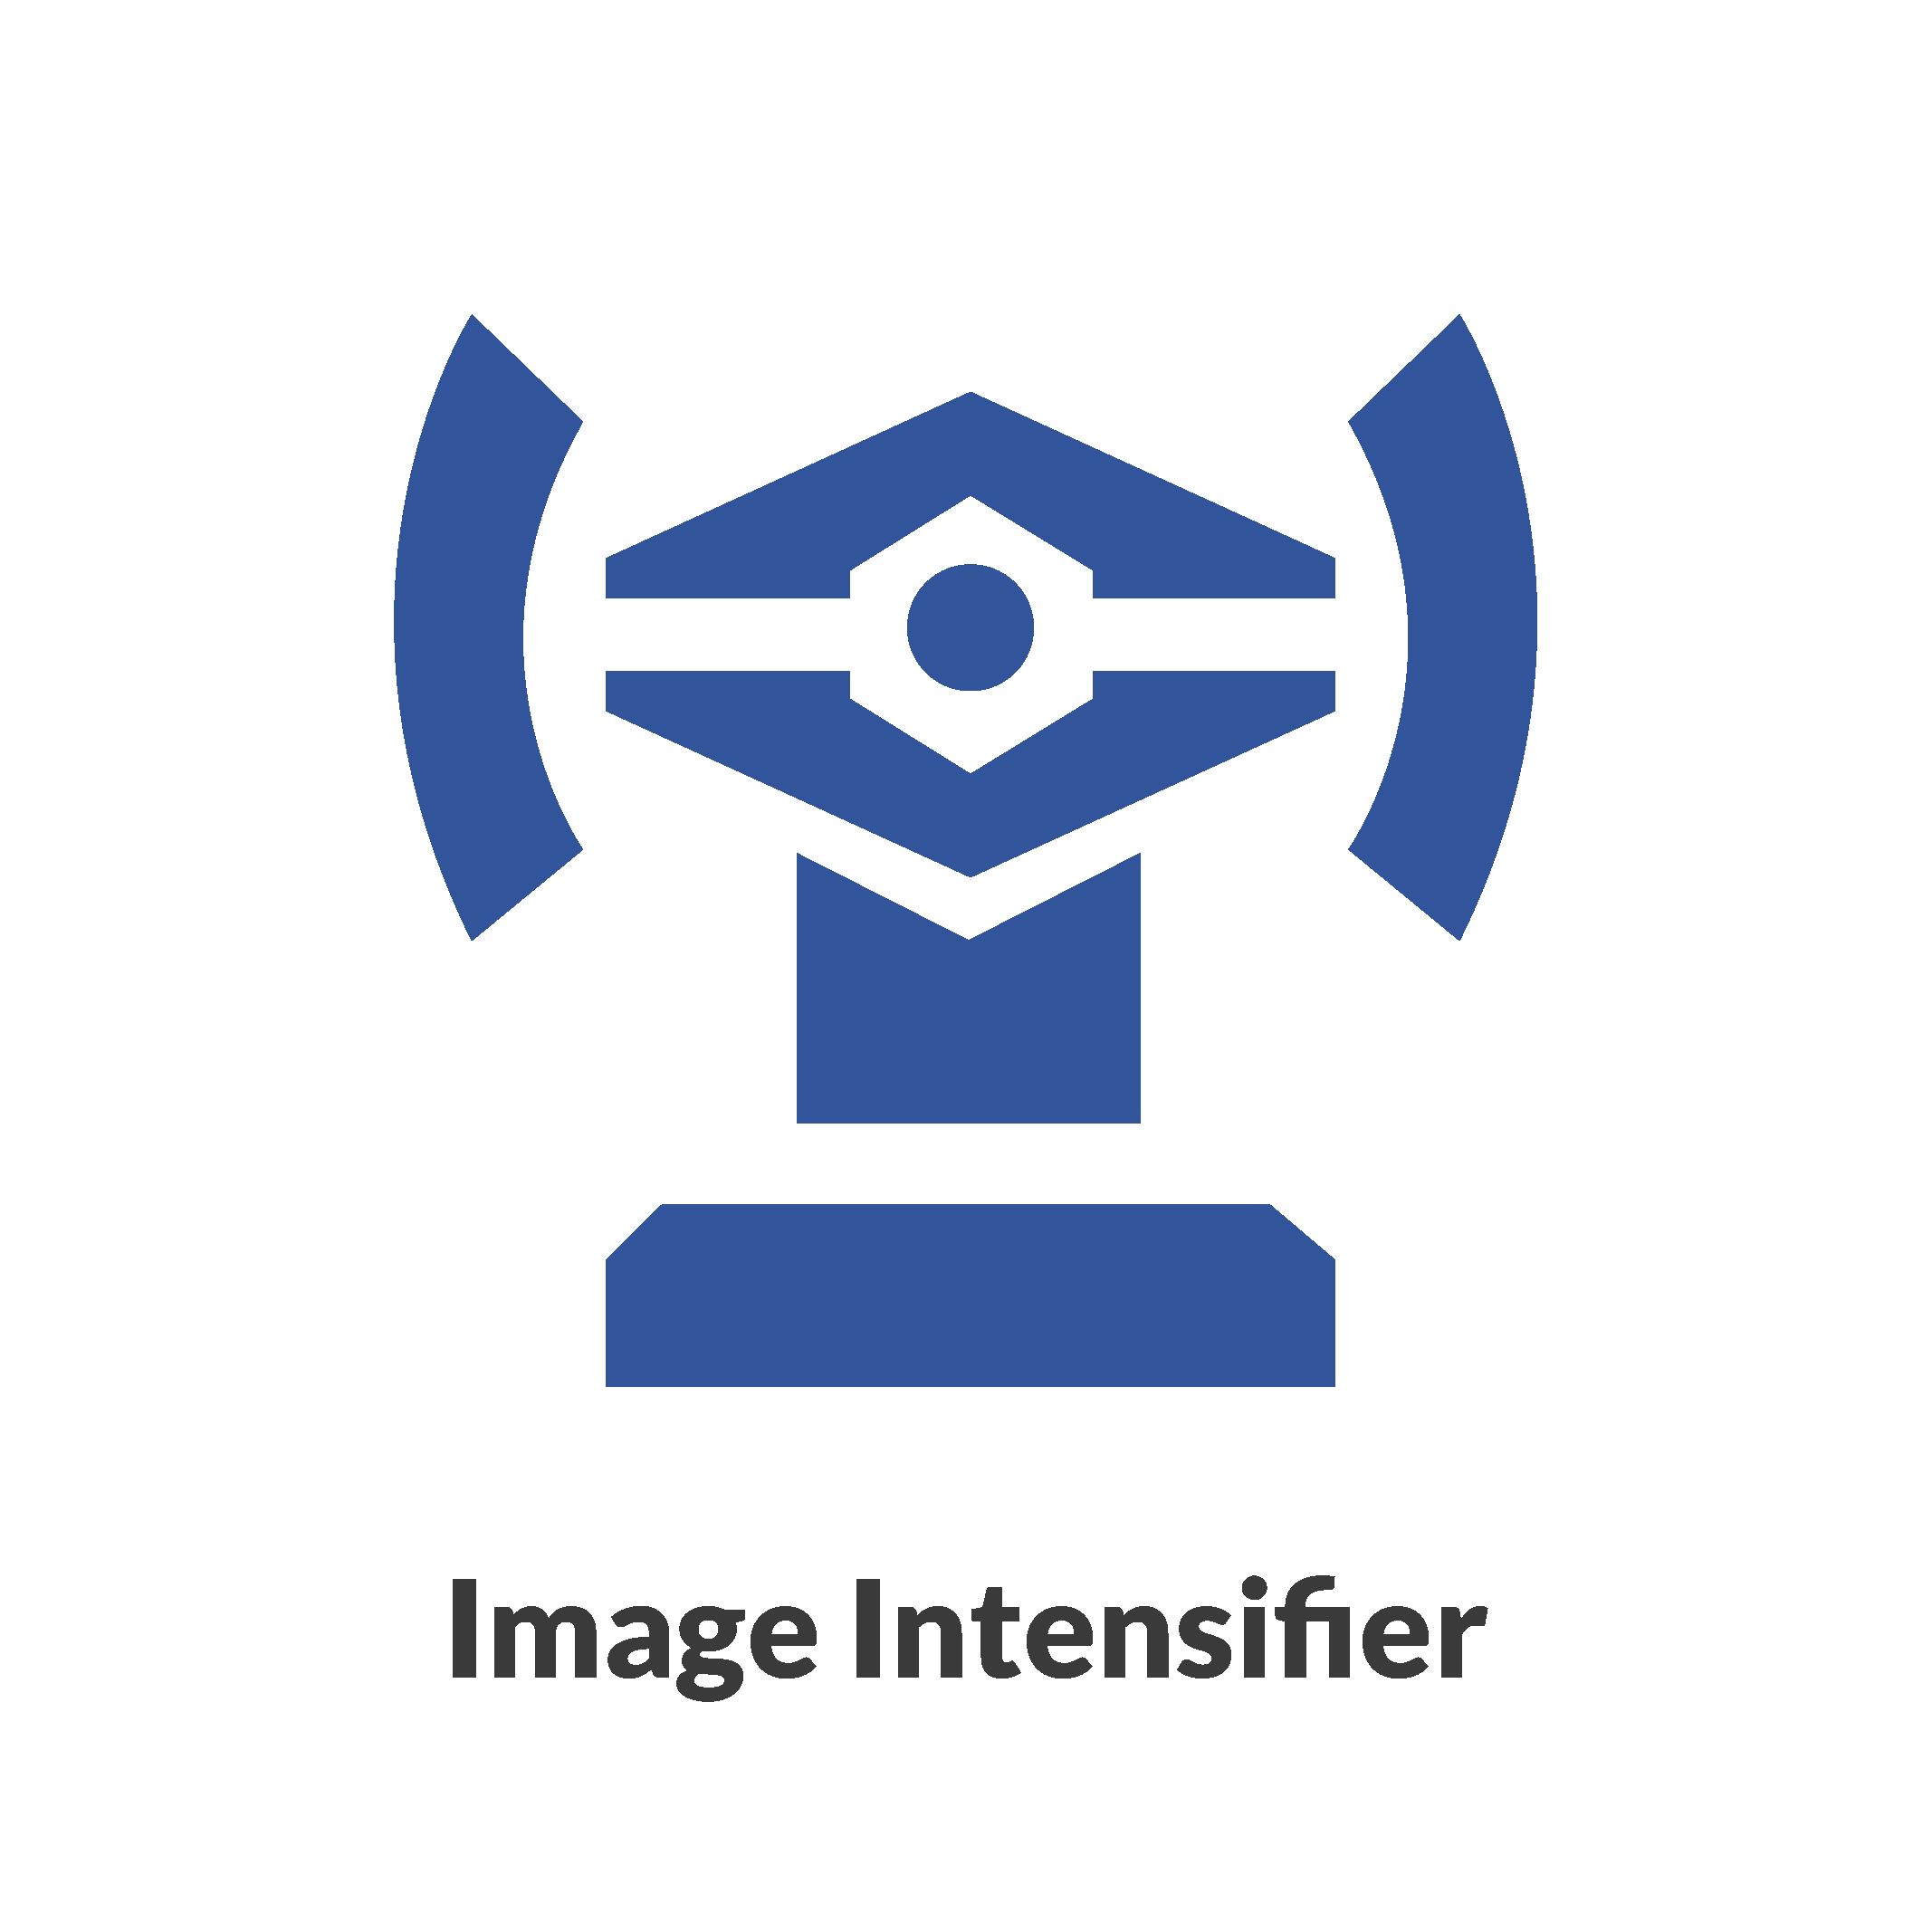 Image Intensifier